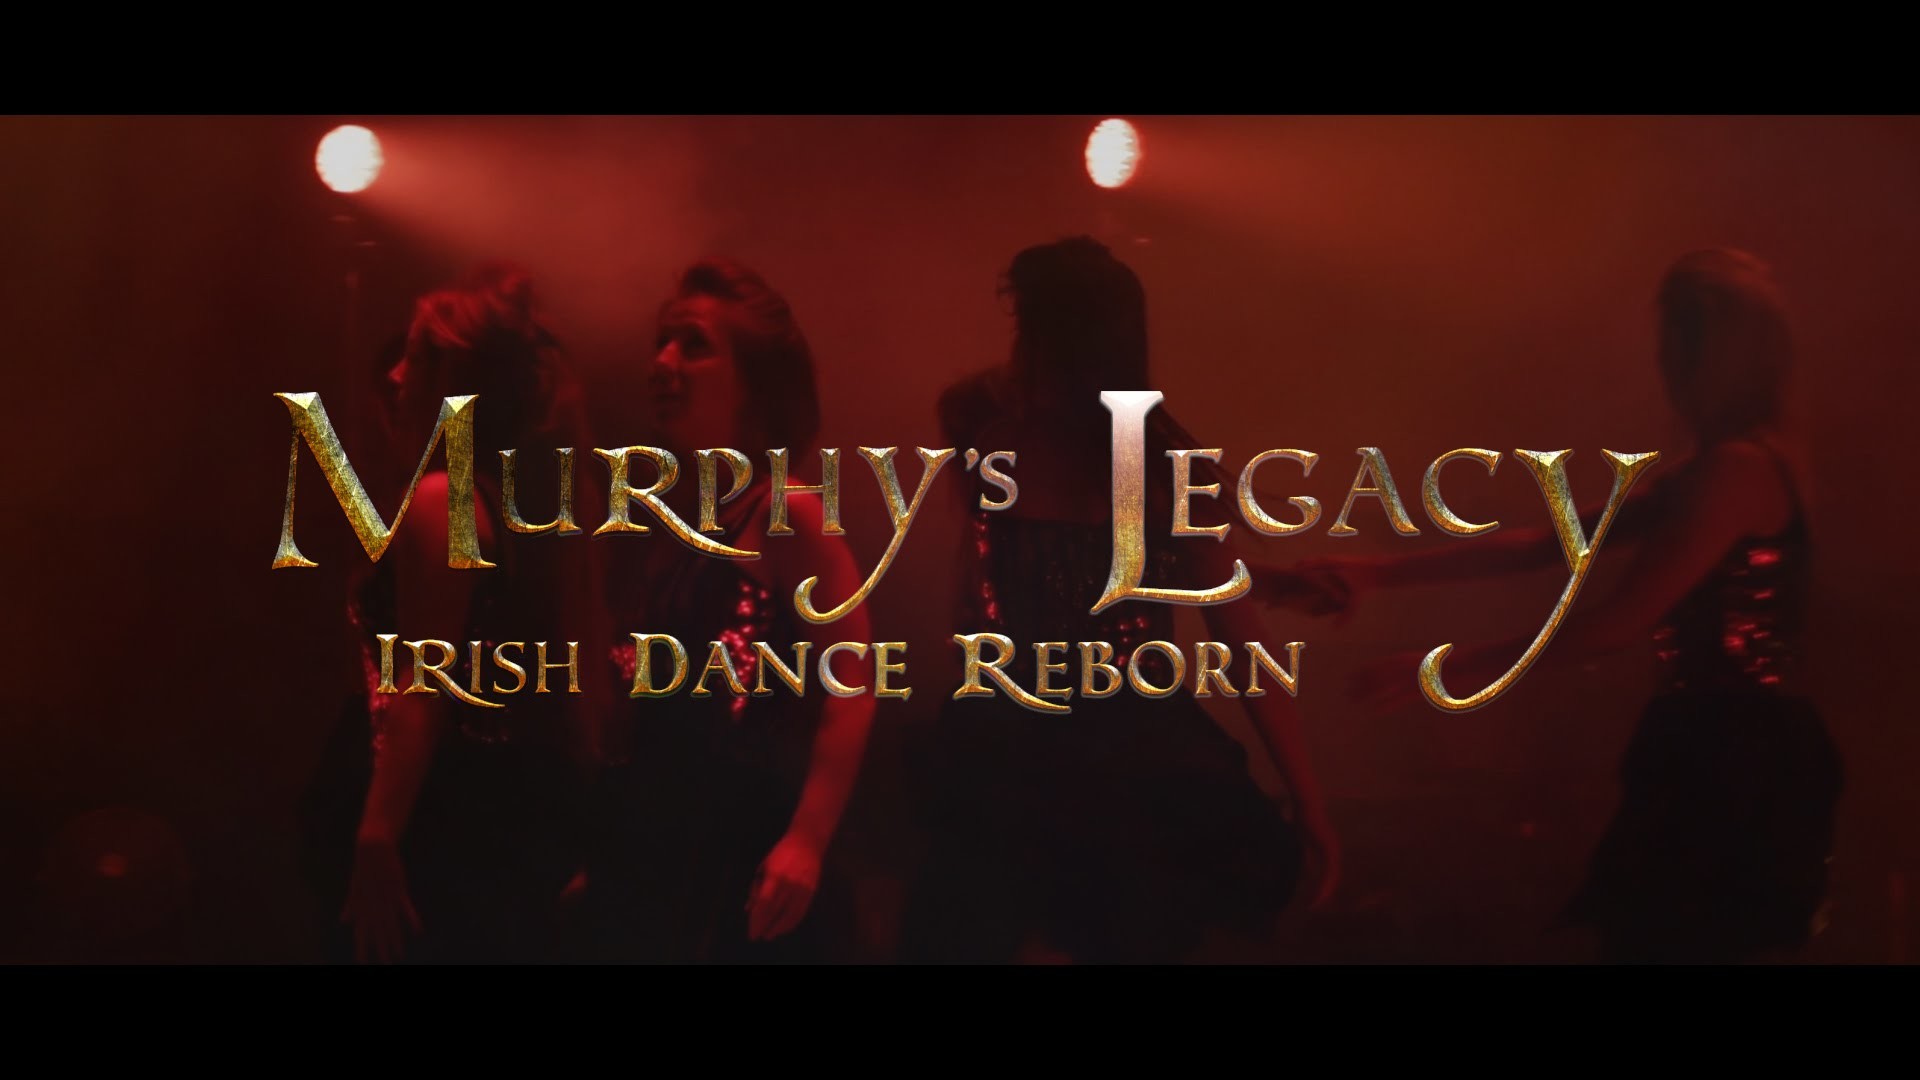 1920x1080 Murphy's Celtic Legacy Irish Dance Reborn